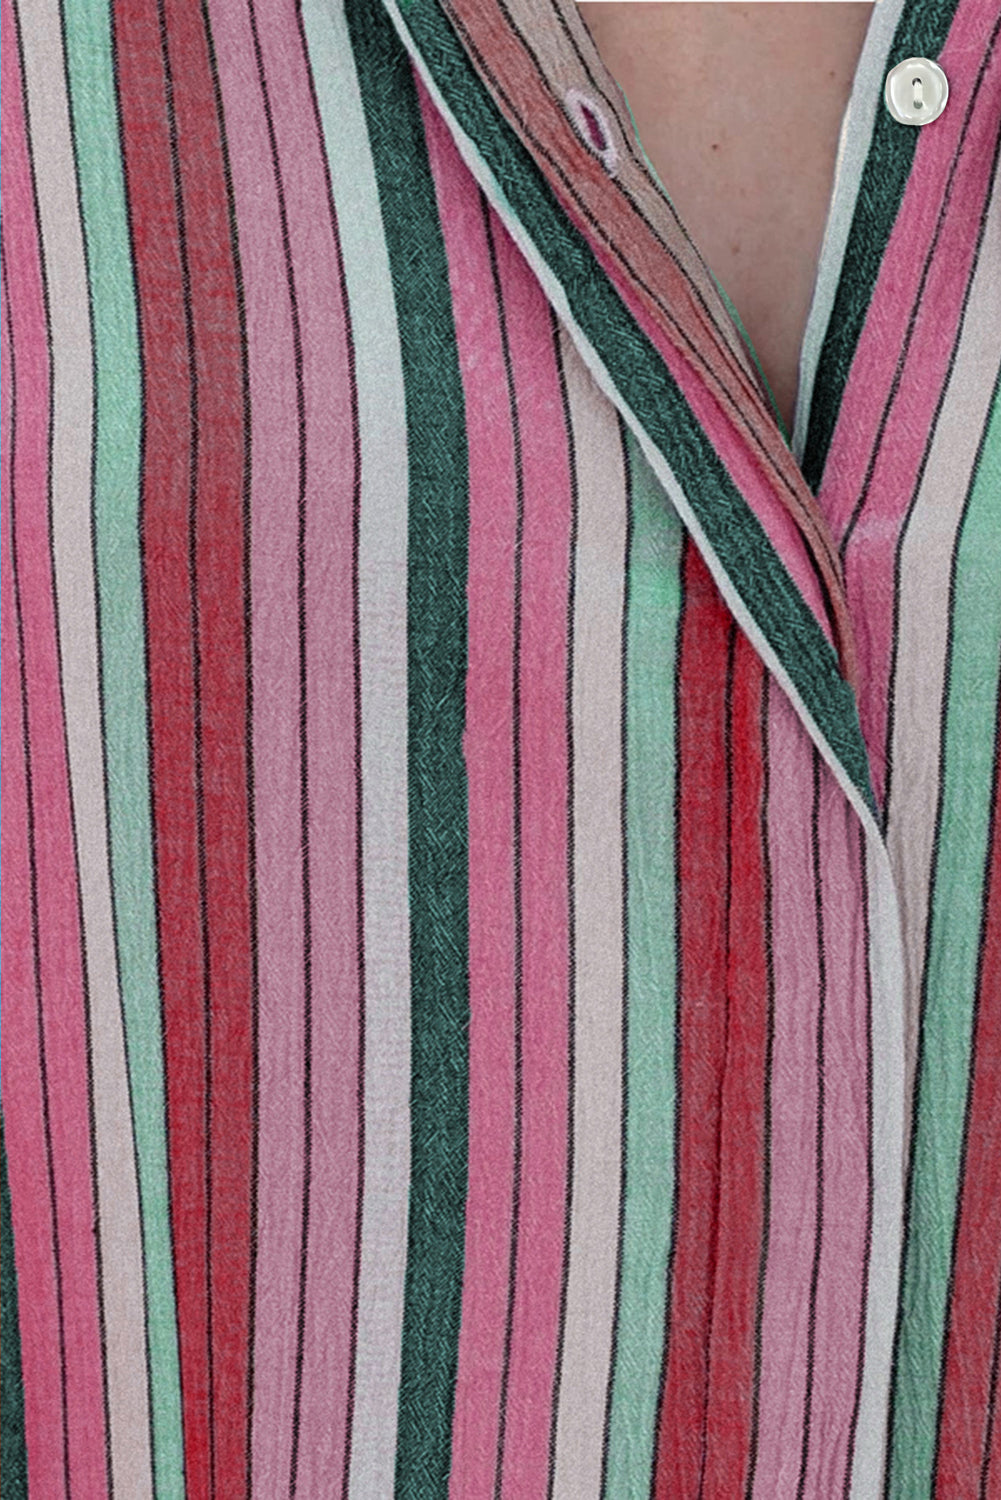 Multi-color Striped Short Sleeve Blouse